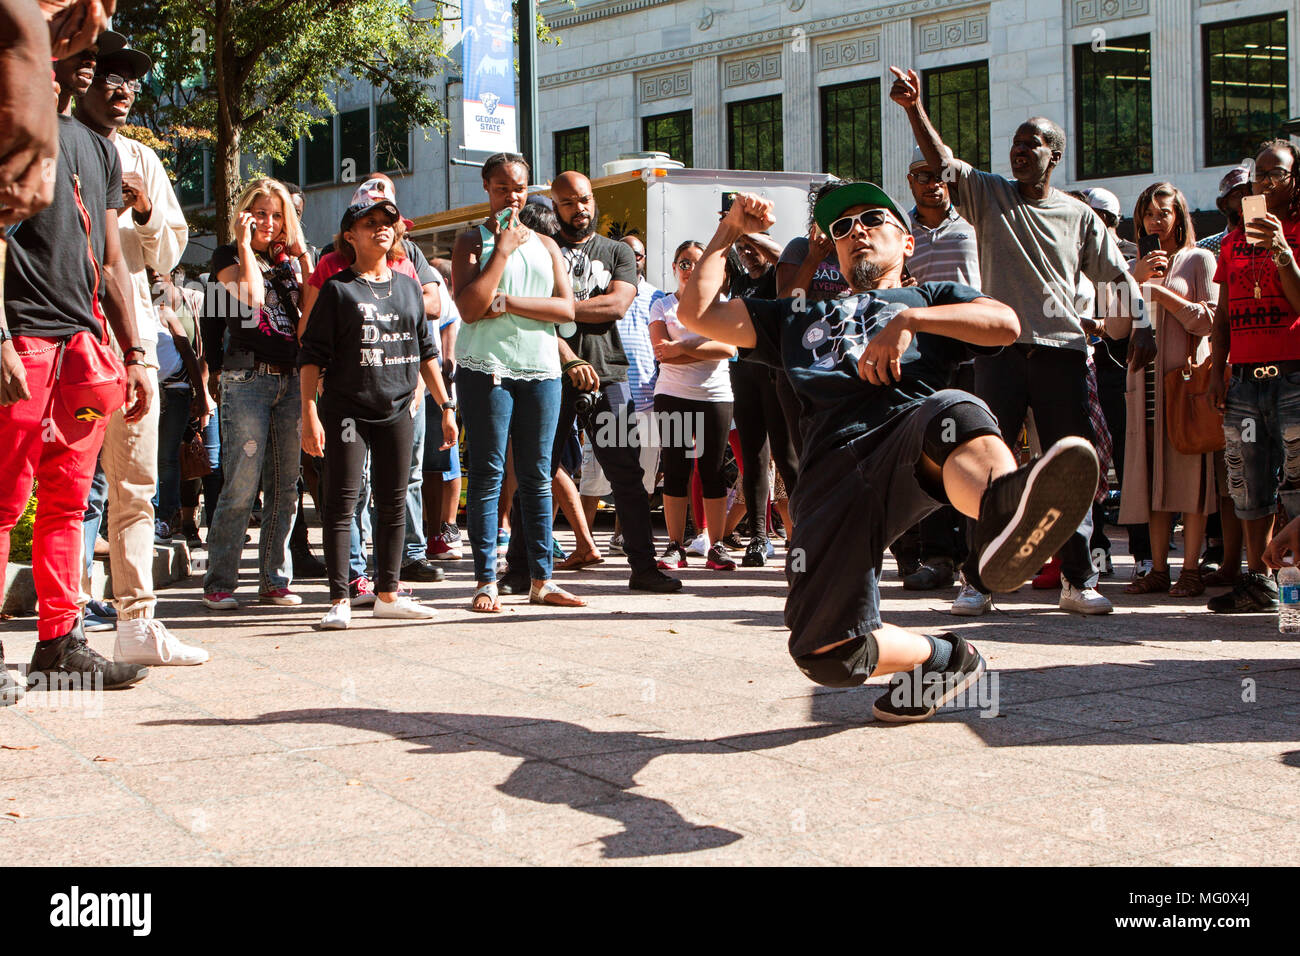 A young man spontaneously break dances as spectators watch, as part of a b-boy battle at Atlanta Hip Hop Day on October 8, 2016 in Atlanta, GA. Stock Photo